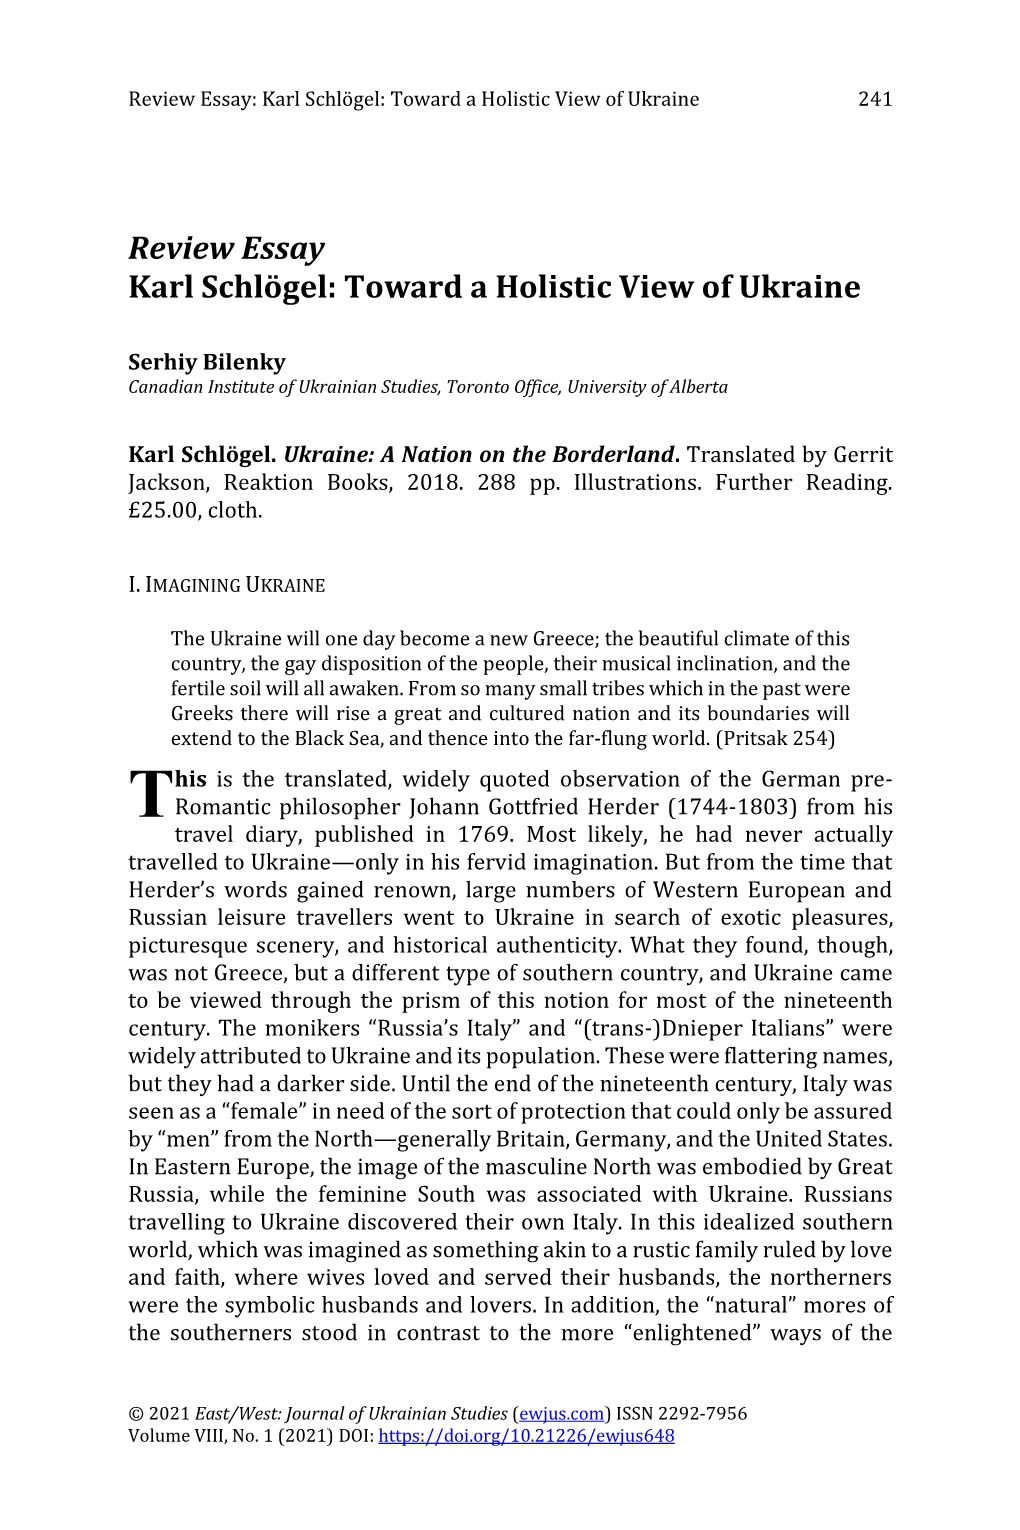 Review Essay Karl Schlögel: Toward a Holistic View of Ukraine